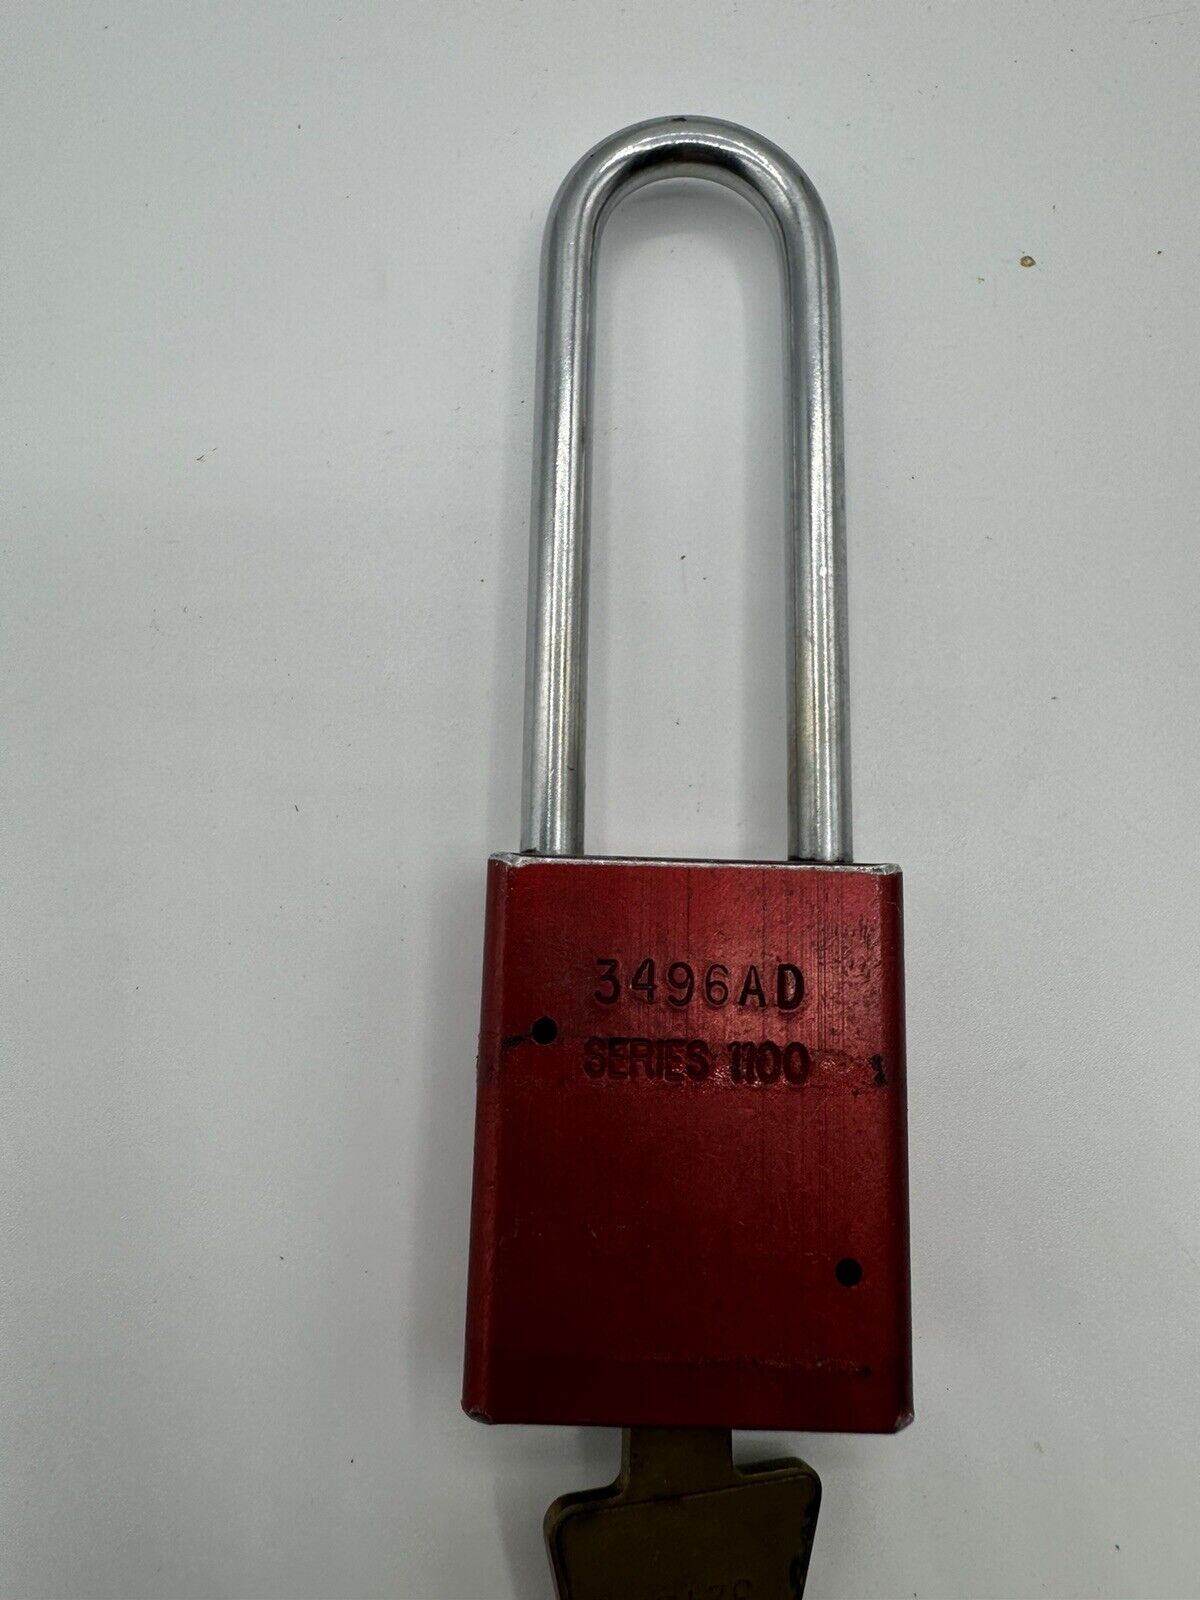 American Lock A1100 Series Padlock with 3